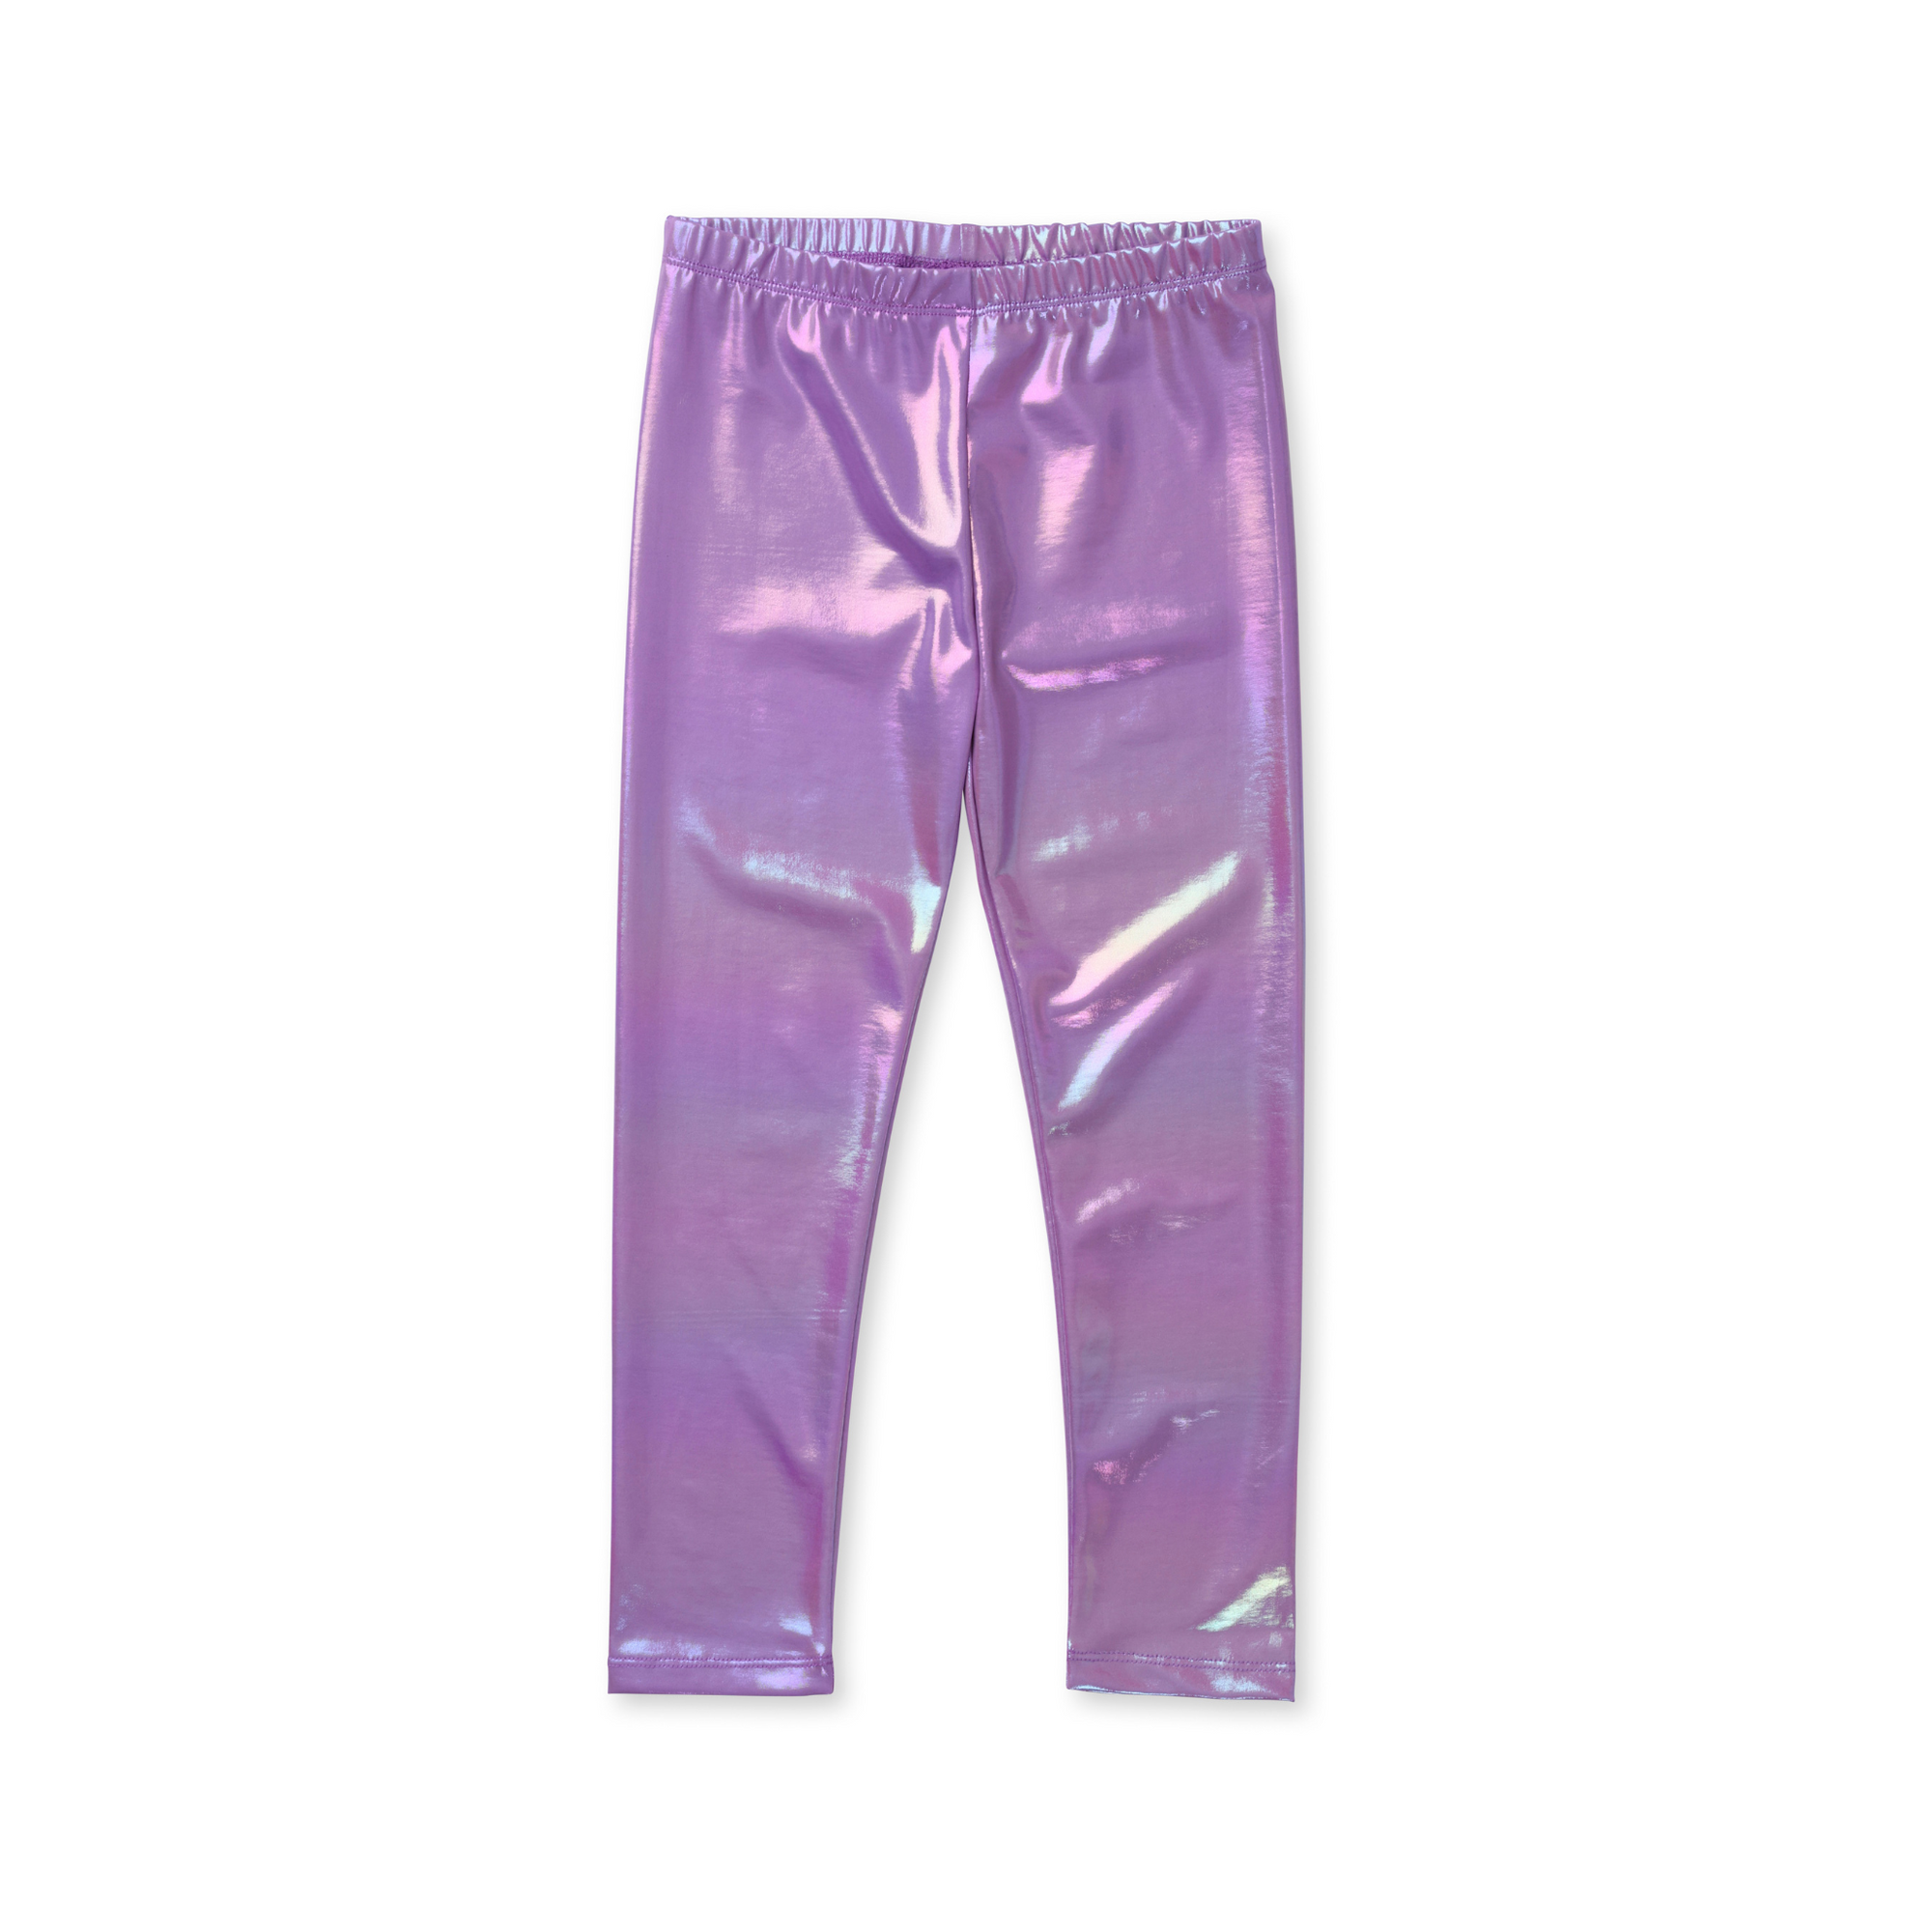 Minti Blasted Track Short - Purple Wash - CLOTHING-GIRL-Girls